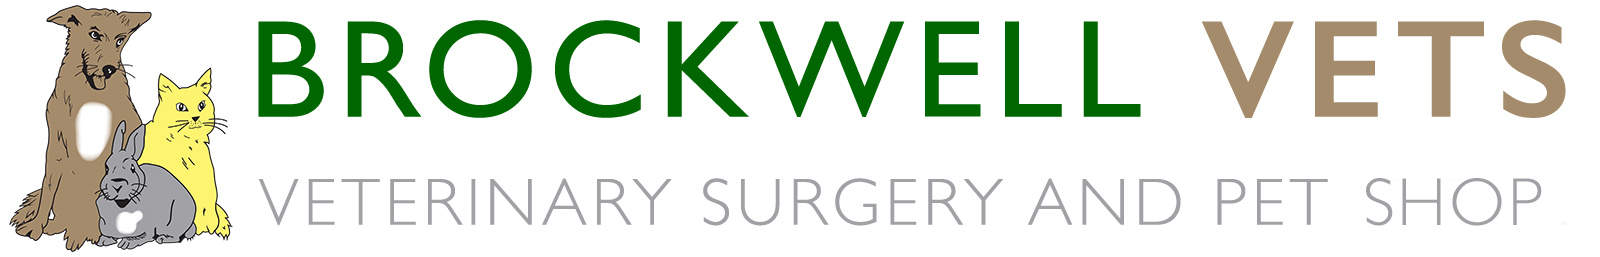 Brockwell Veterinary Surgery